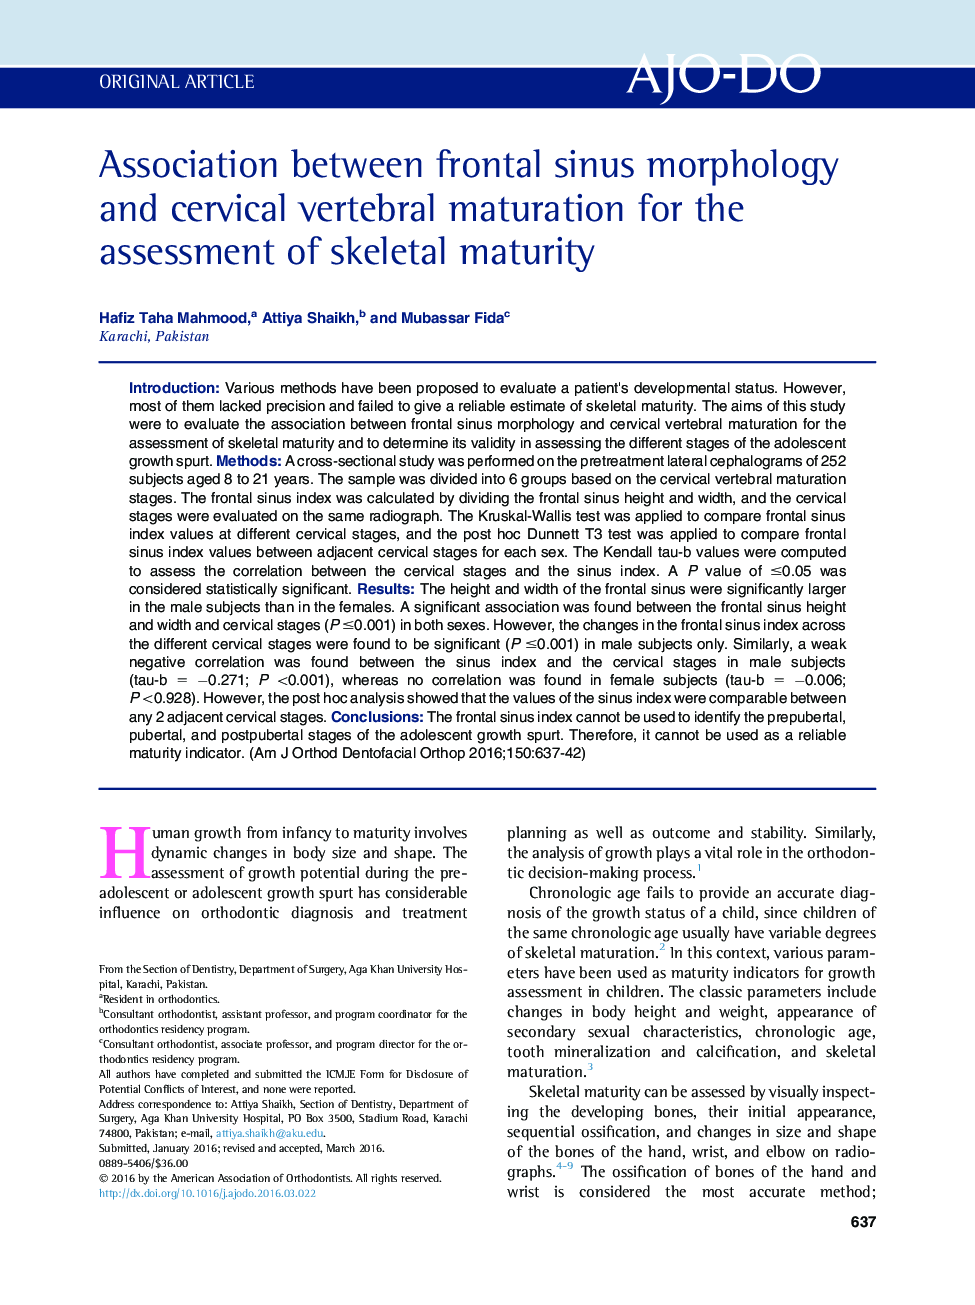 Association between frontal sinus morphology and cervical vertebral maturation for the assessment of skeletal maturity